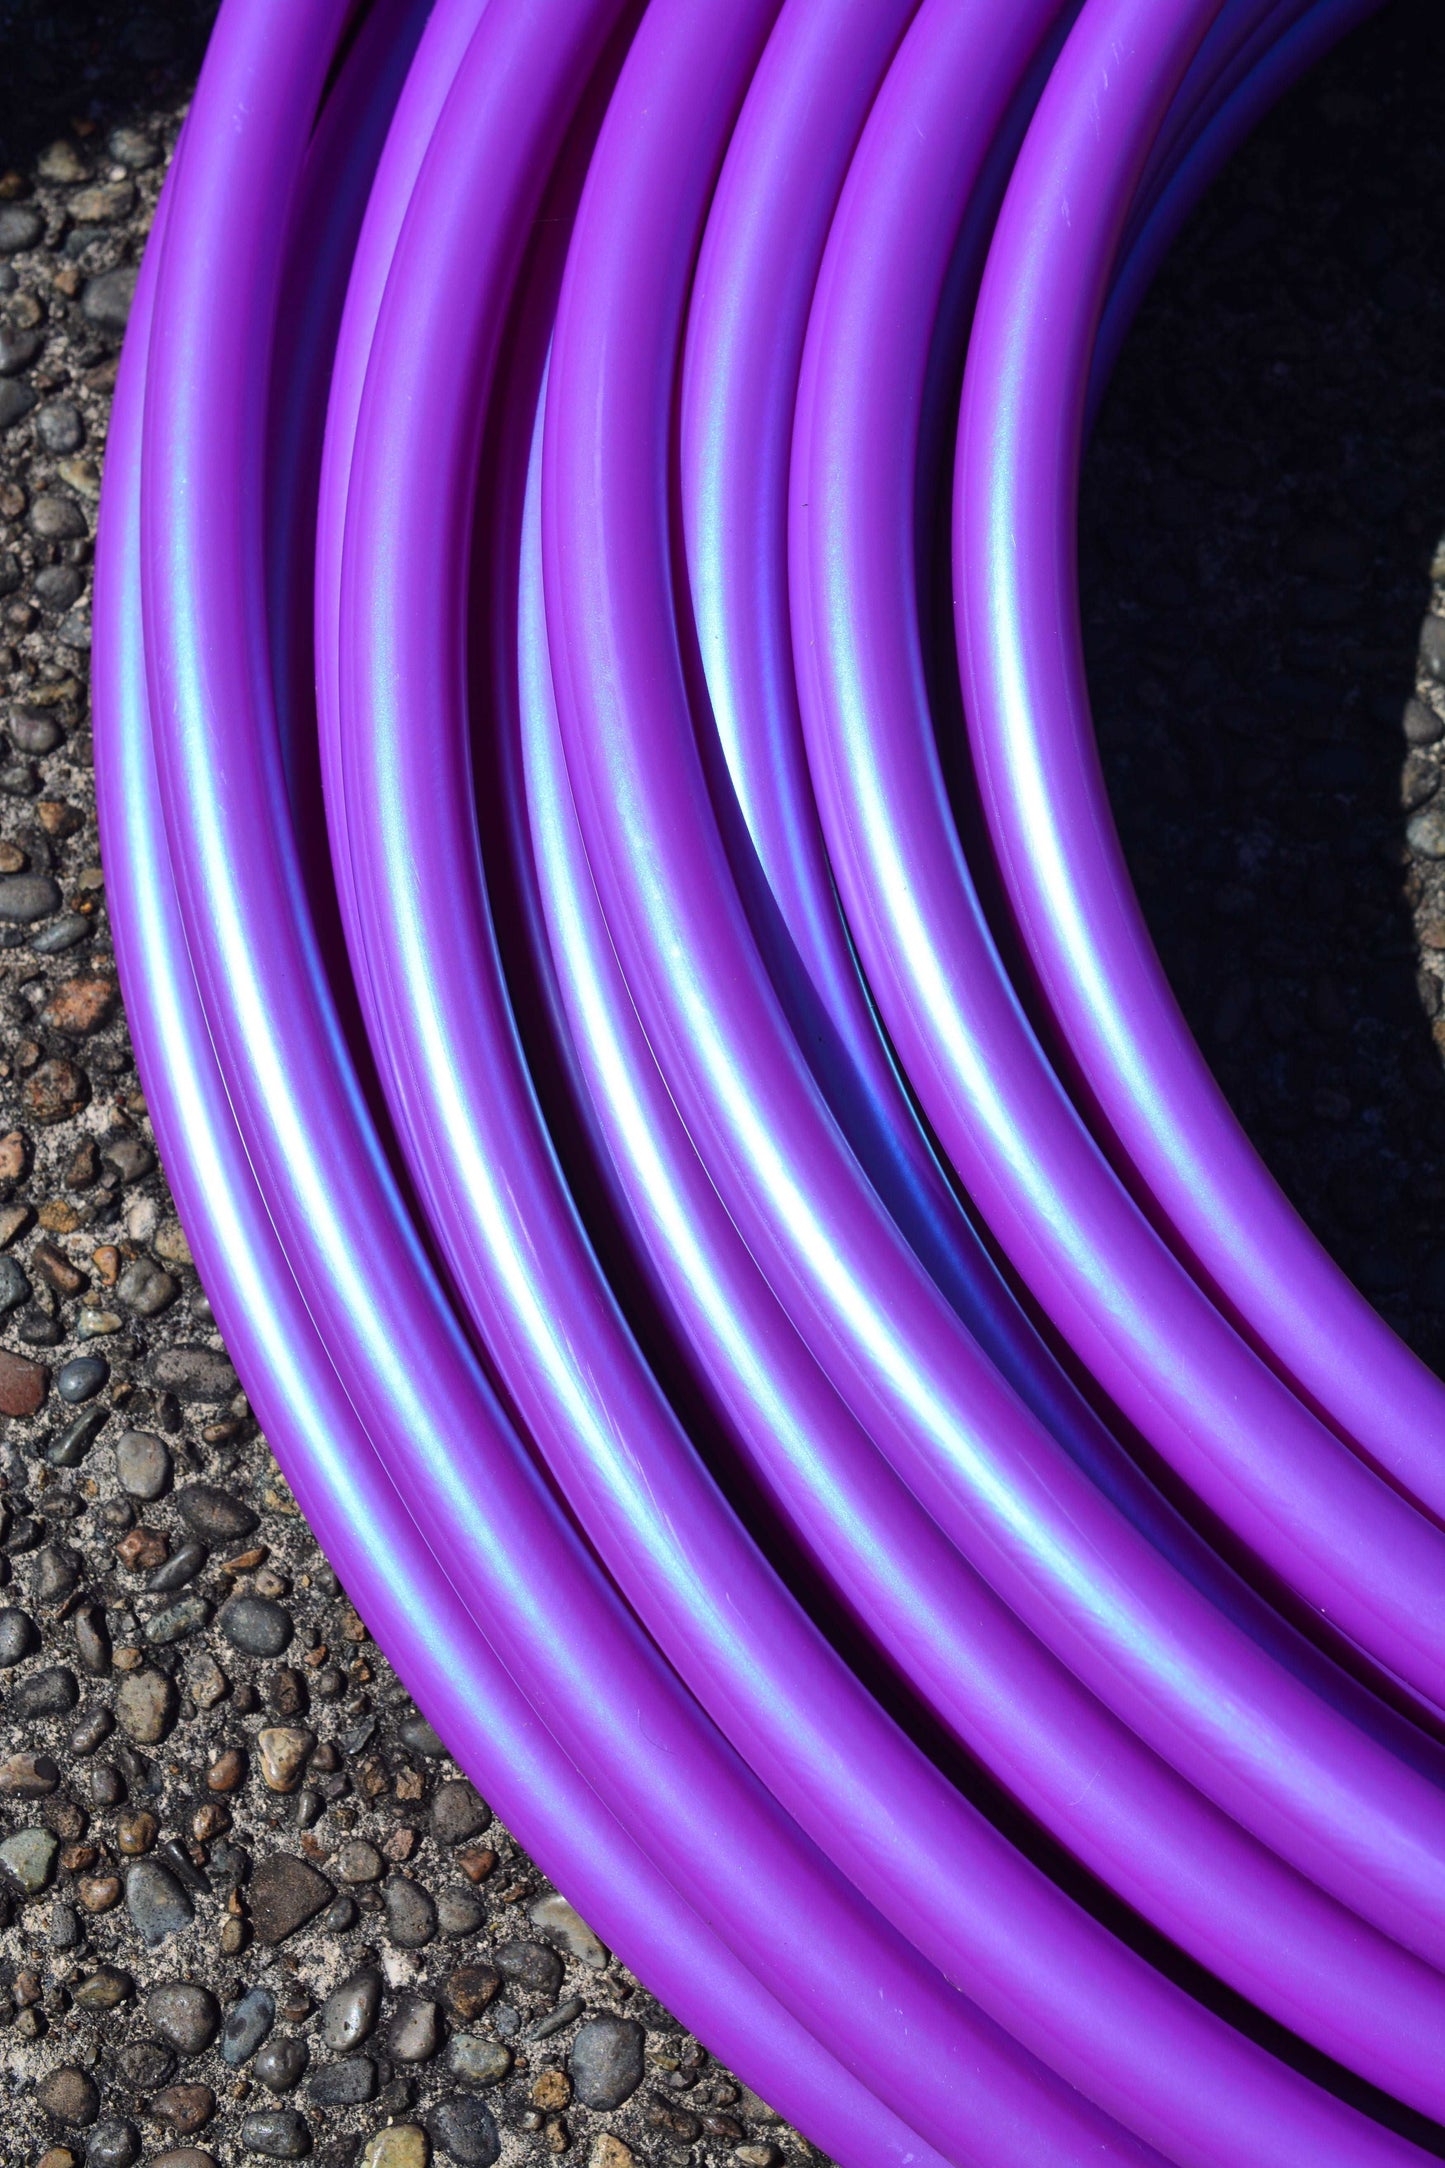 3/4 UV Tanzanite Color-Shift Colored Polypro Hoops